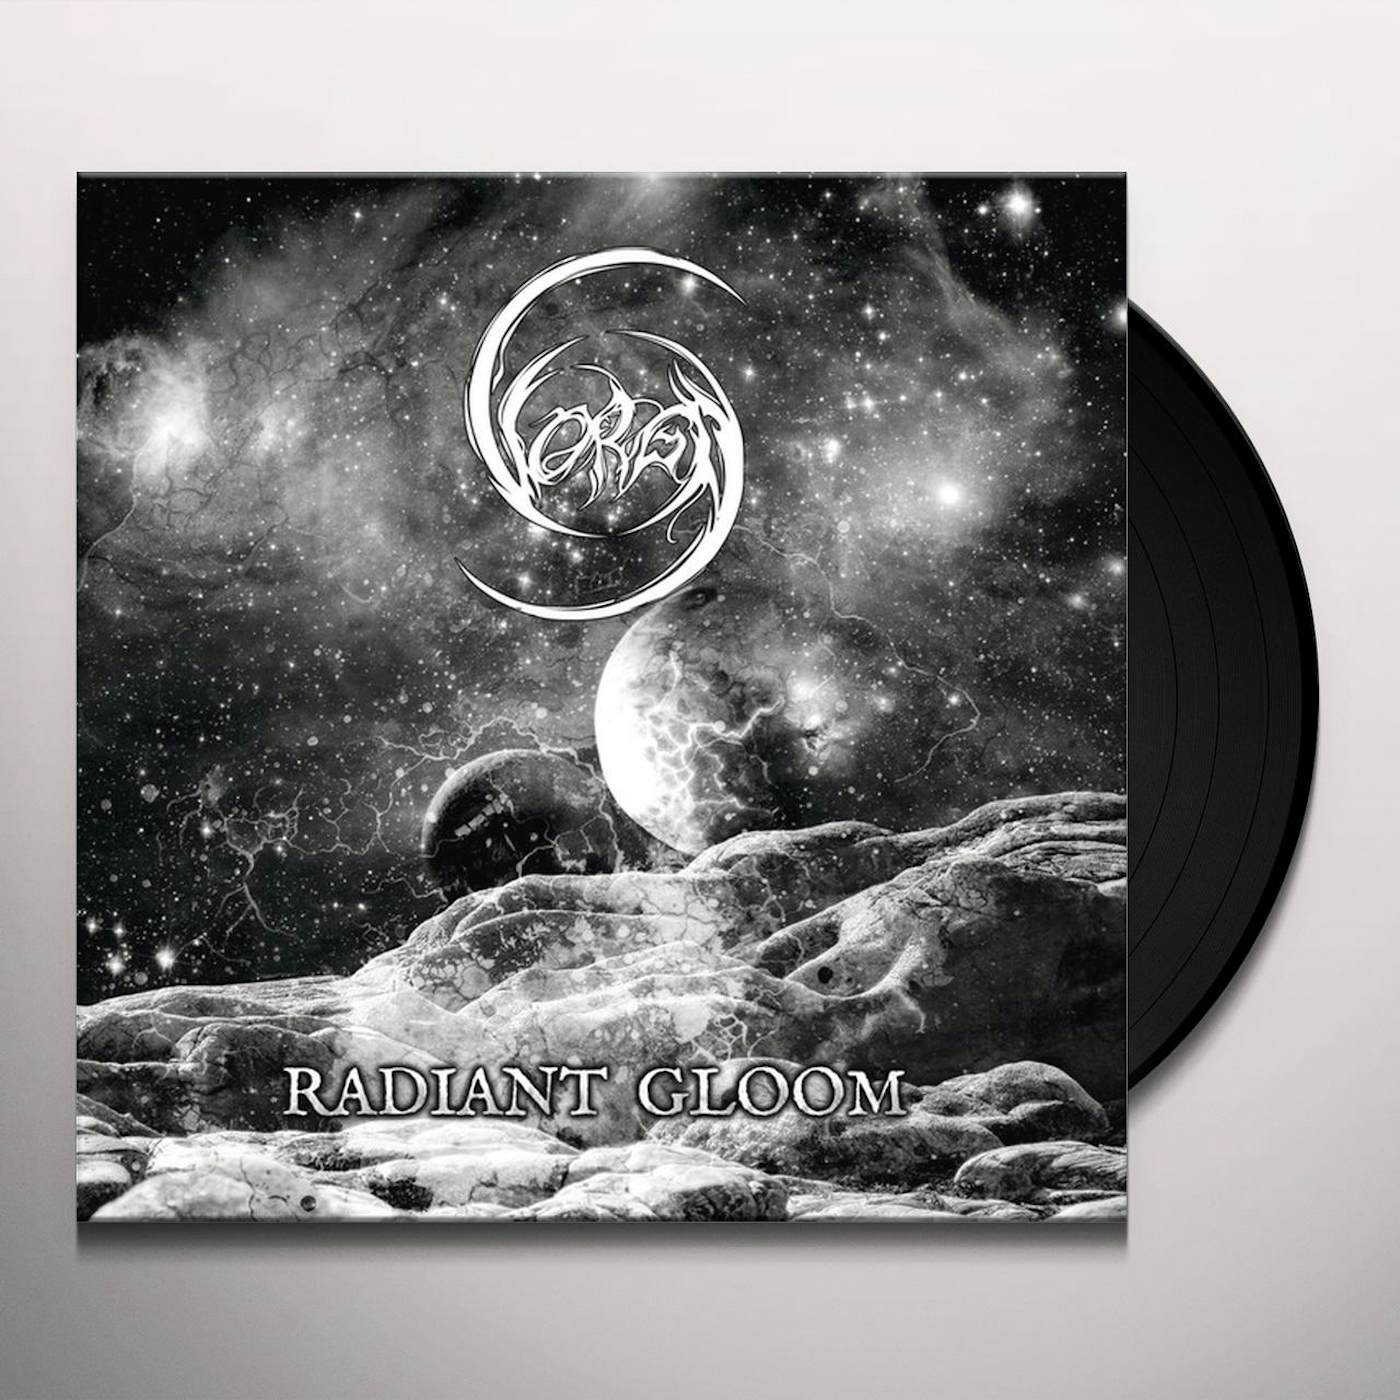 Vorga Radiant Gloom Vinyl Record